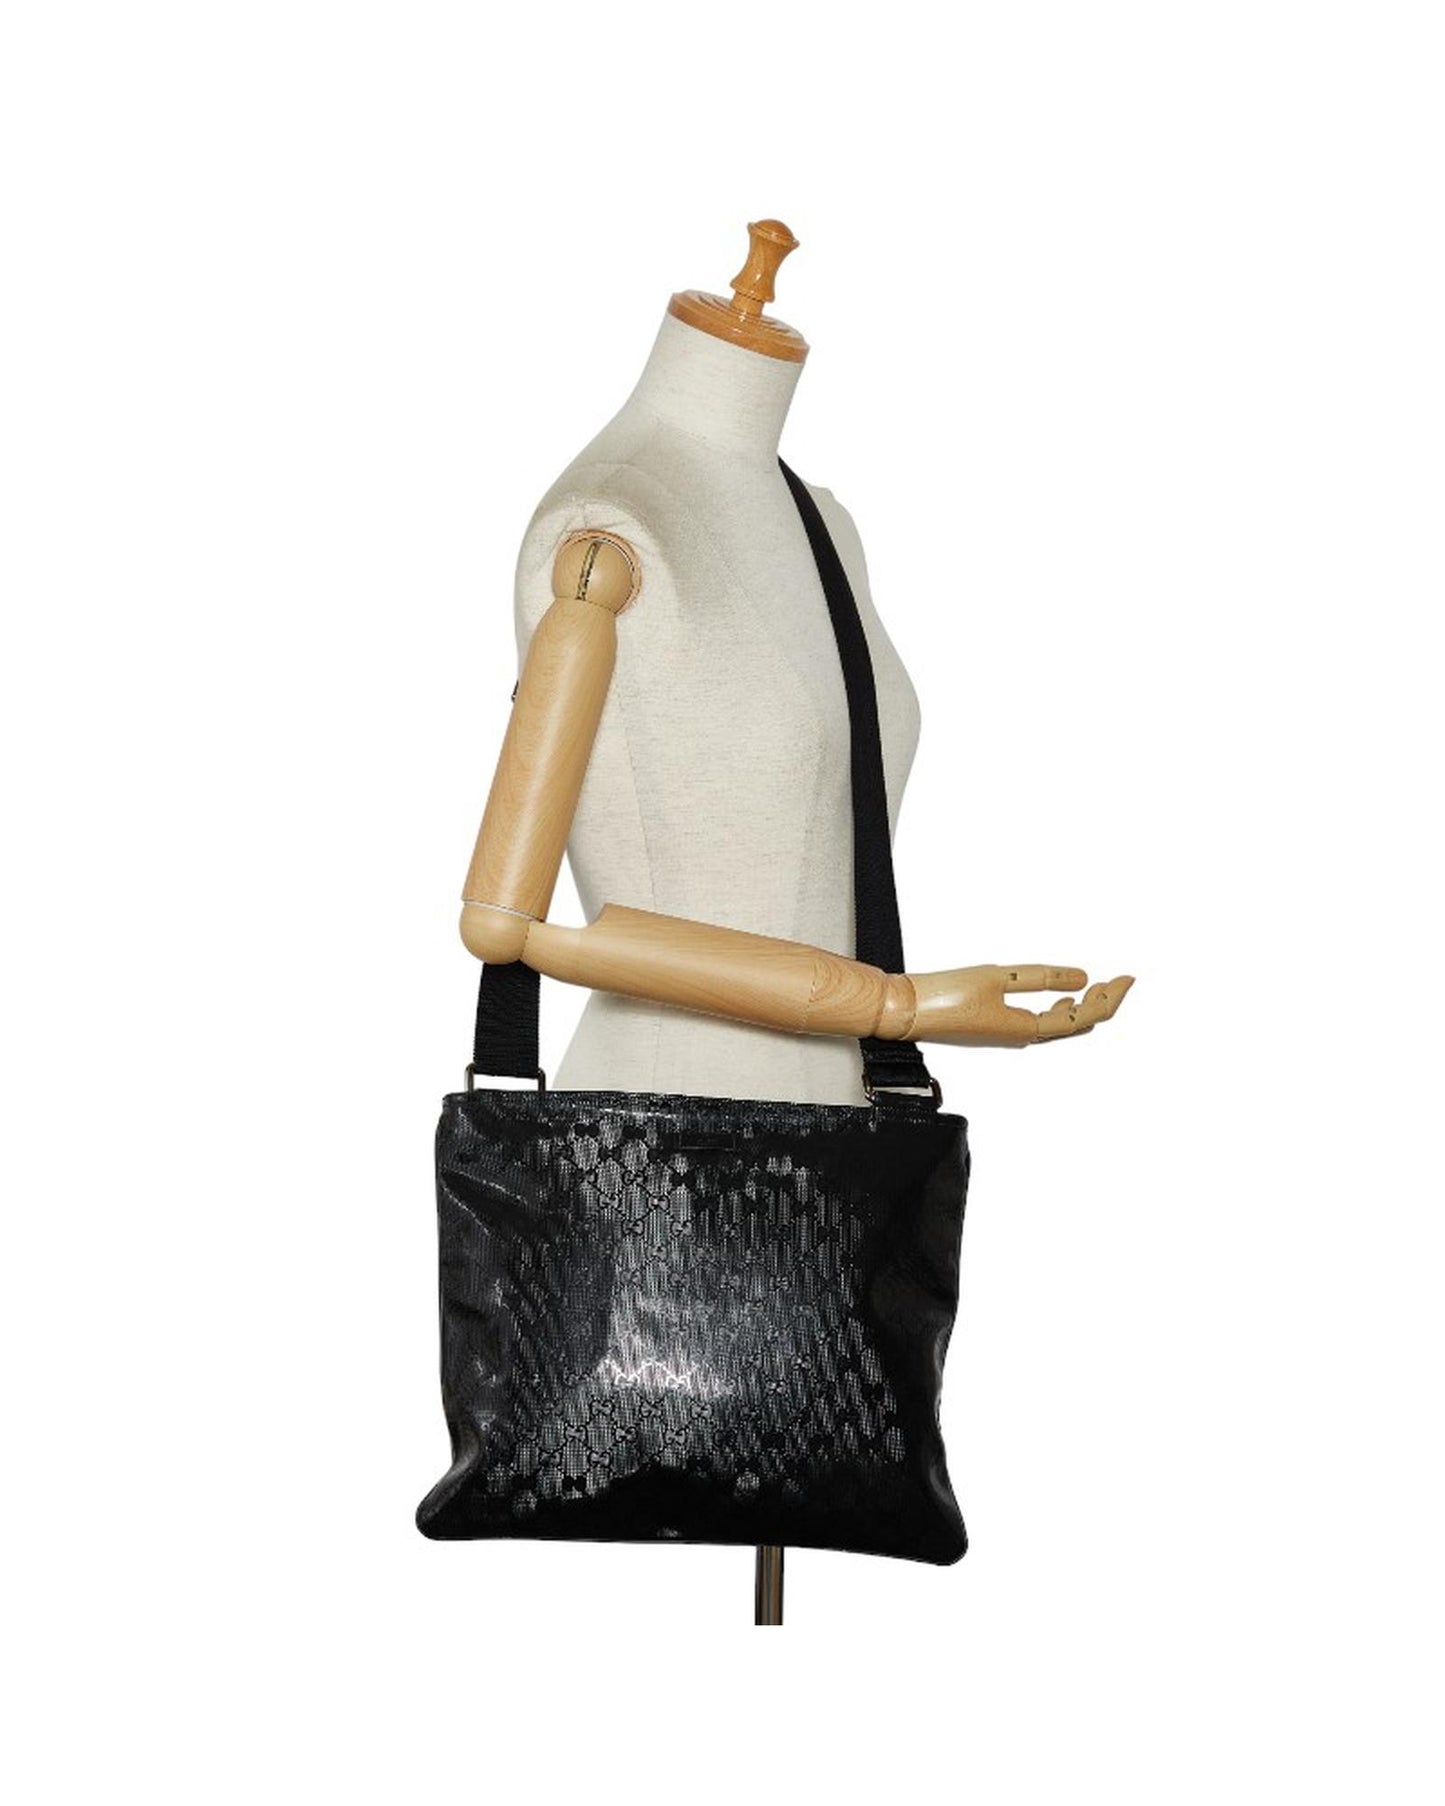 Gucci Women's Black Imprime Messenger Bag in Excellent Condition in Black